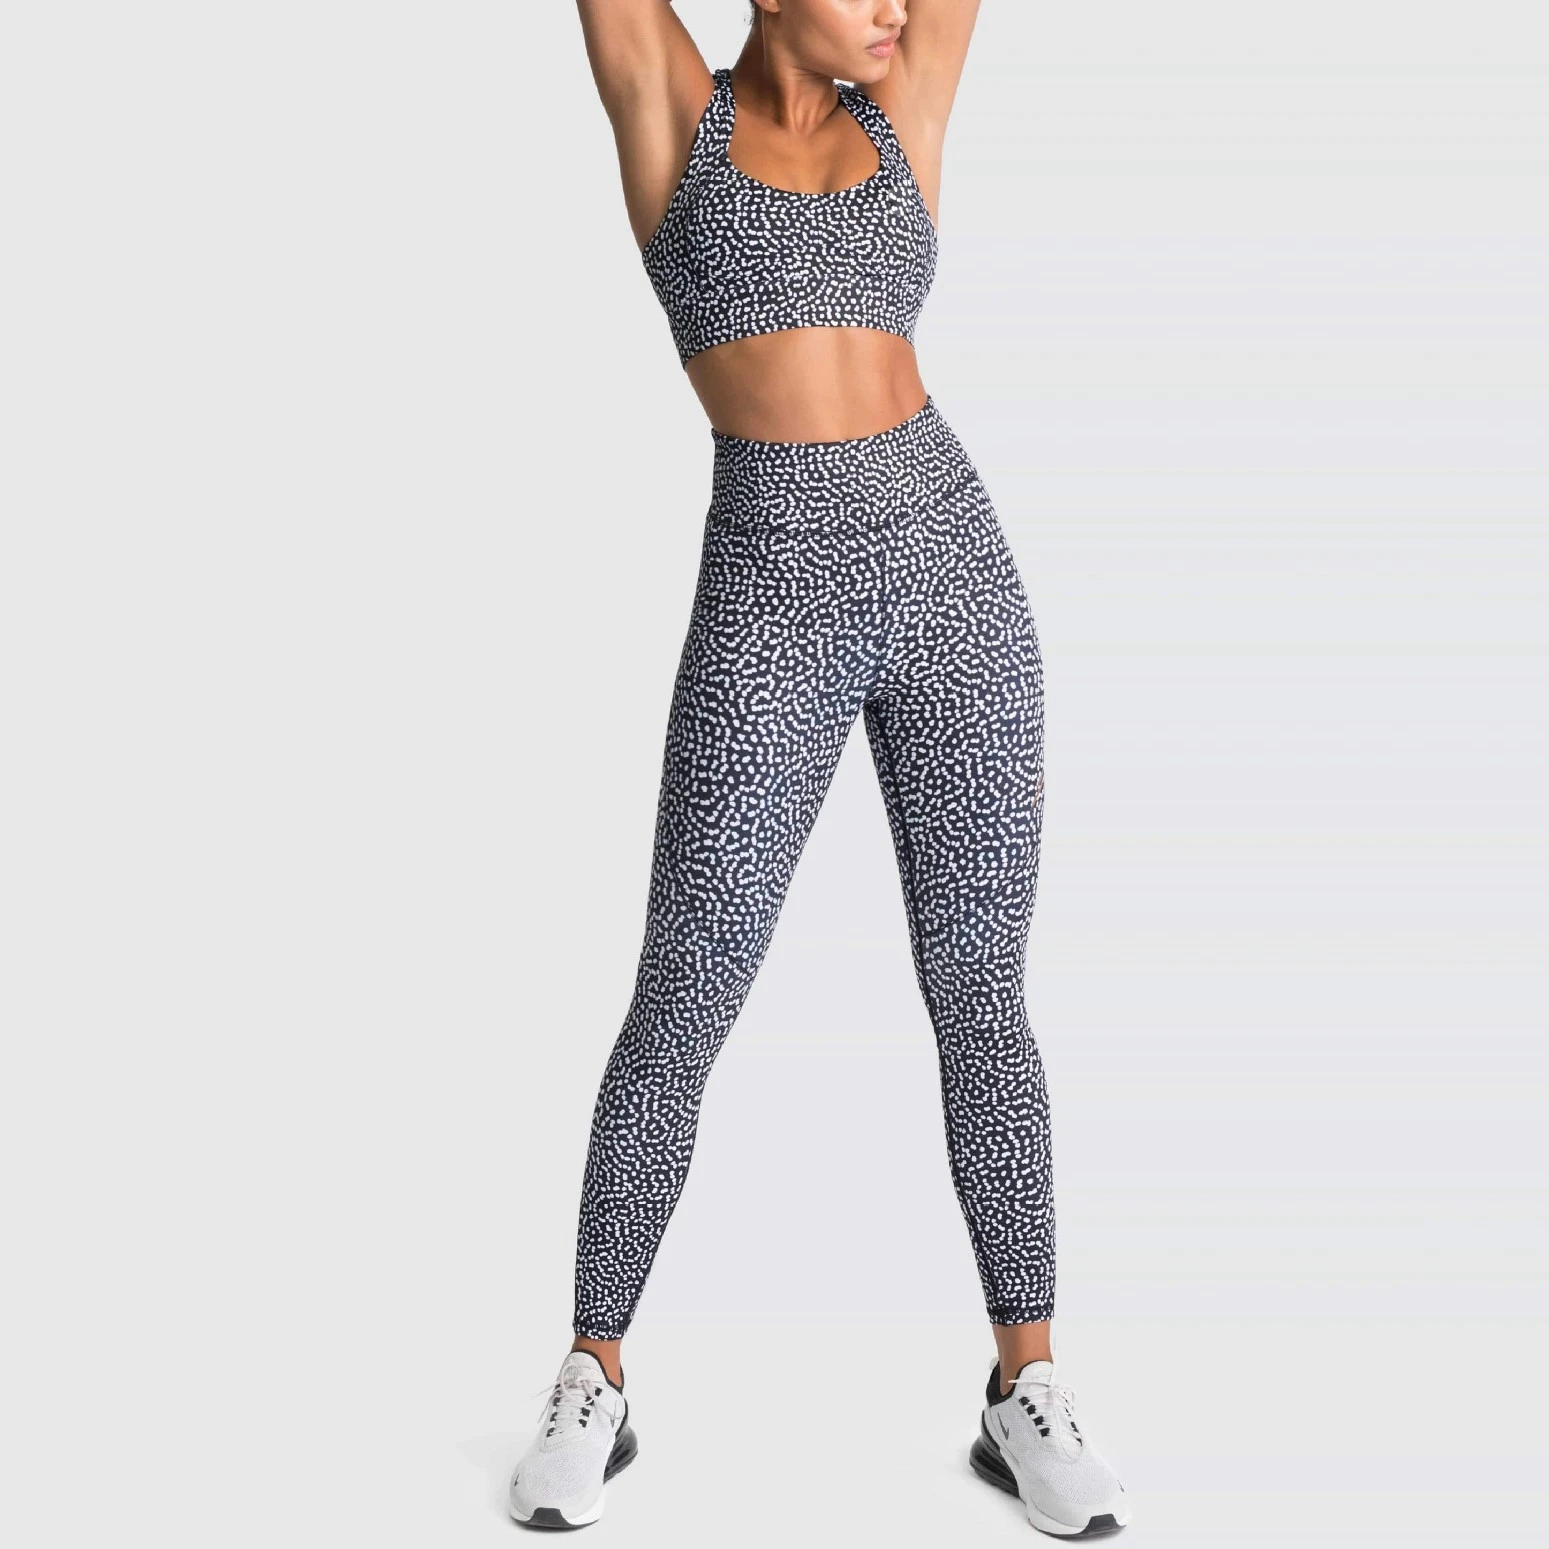 Newest style women print yoga suit legging sets athletic apparel manufacturers